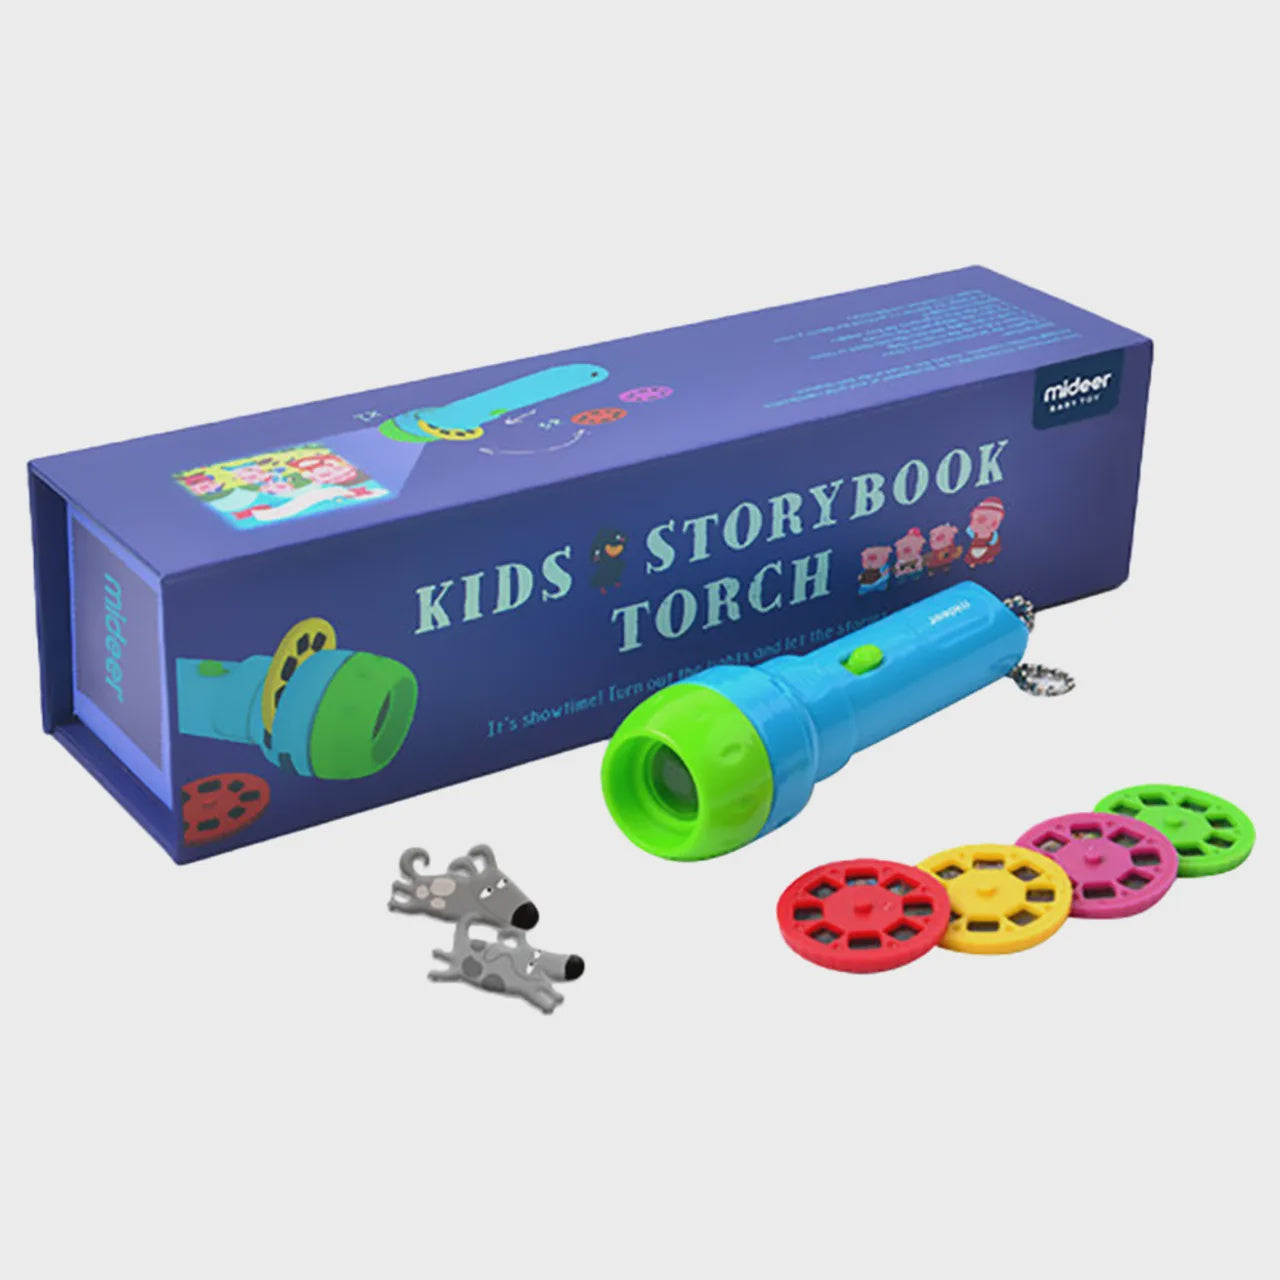 Kids Storybook Torch - 4 Stories